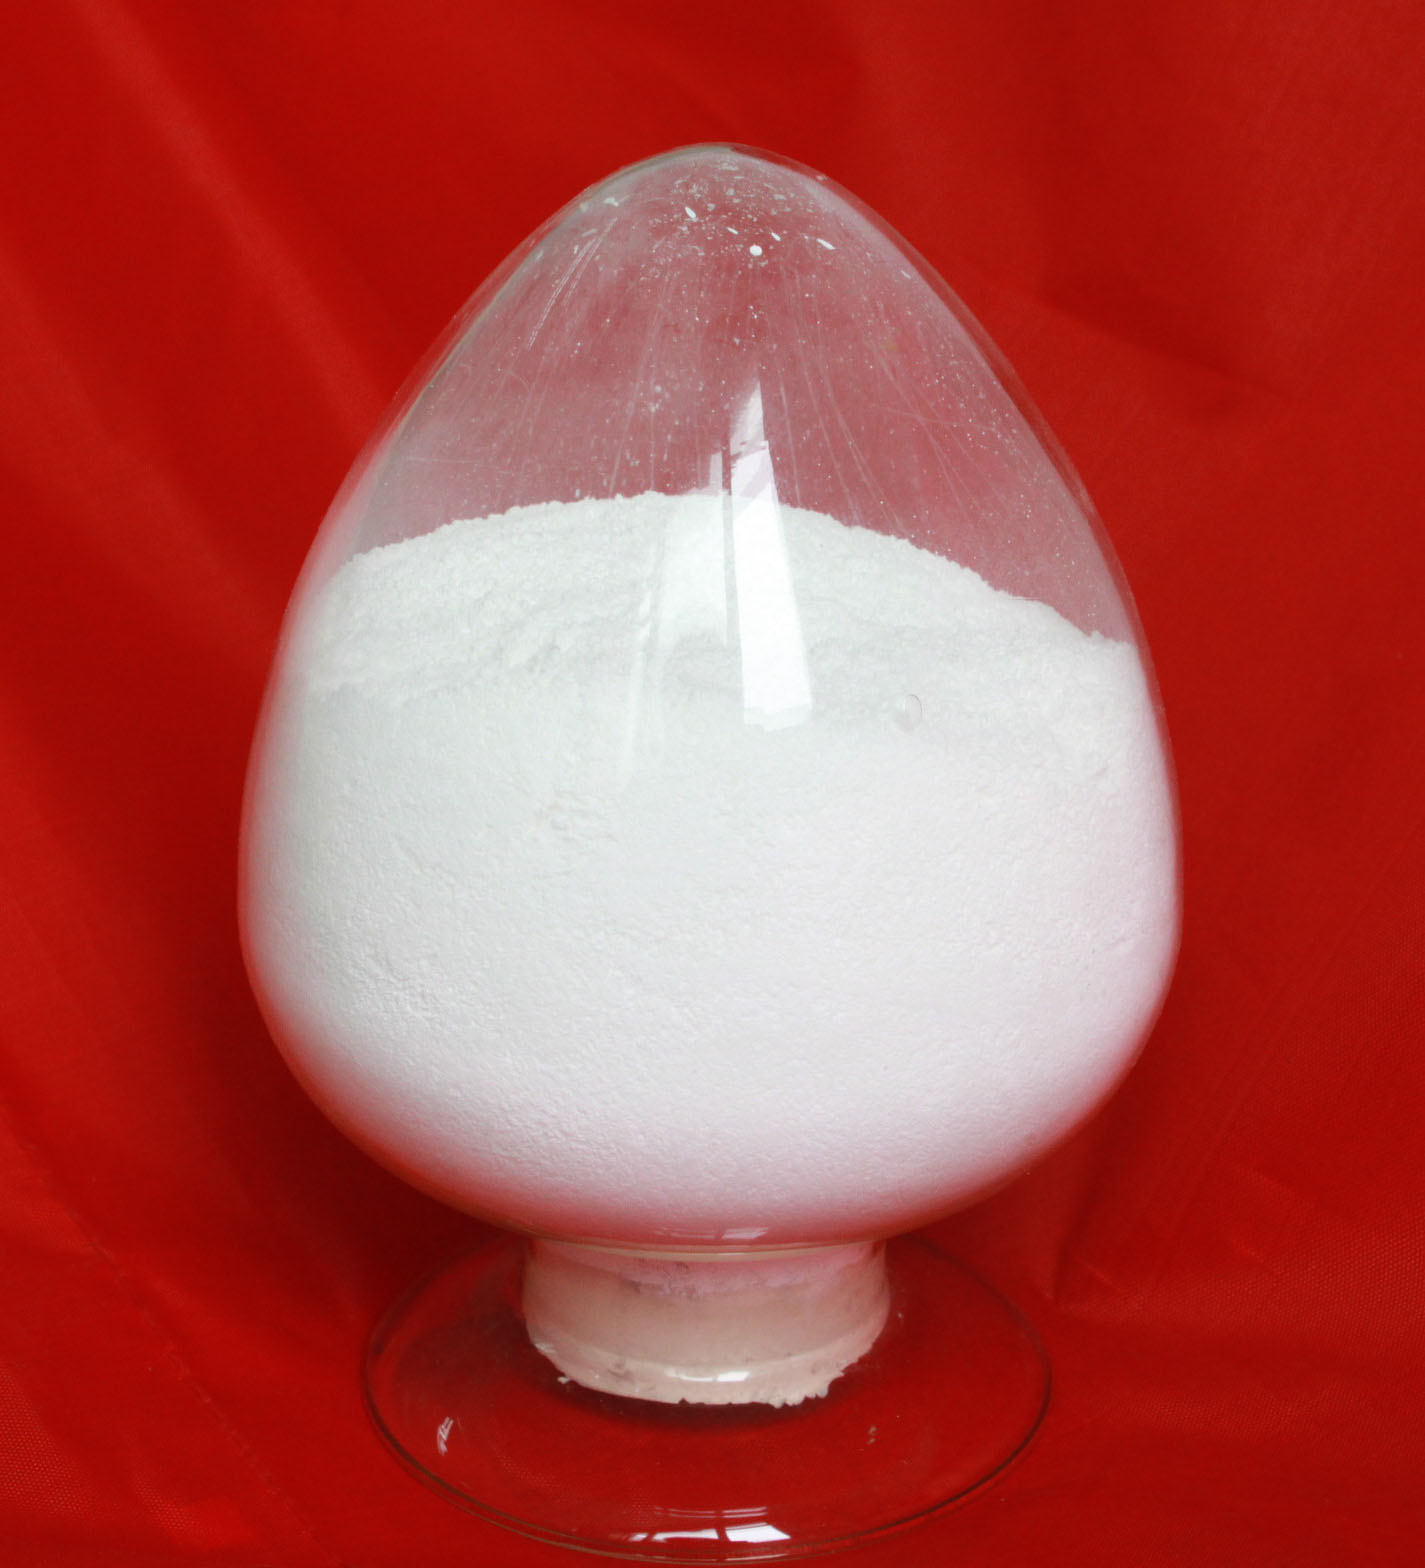 High purity superfine Al2O3 alumina powder... Made in Korea